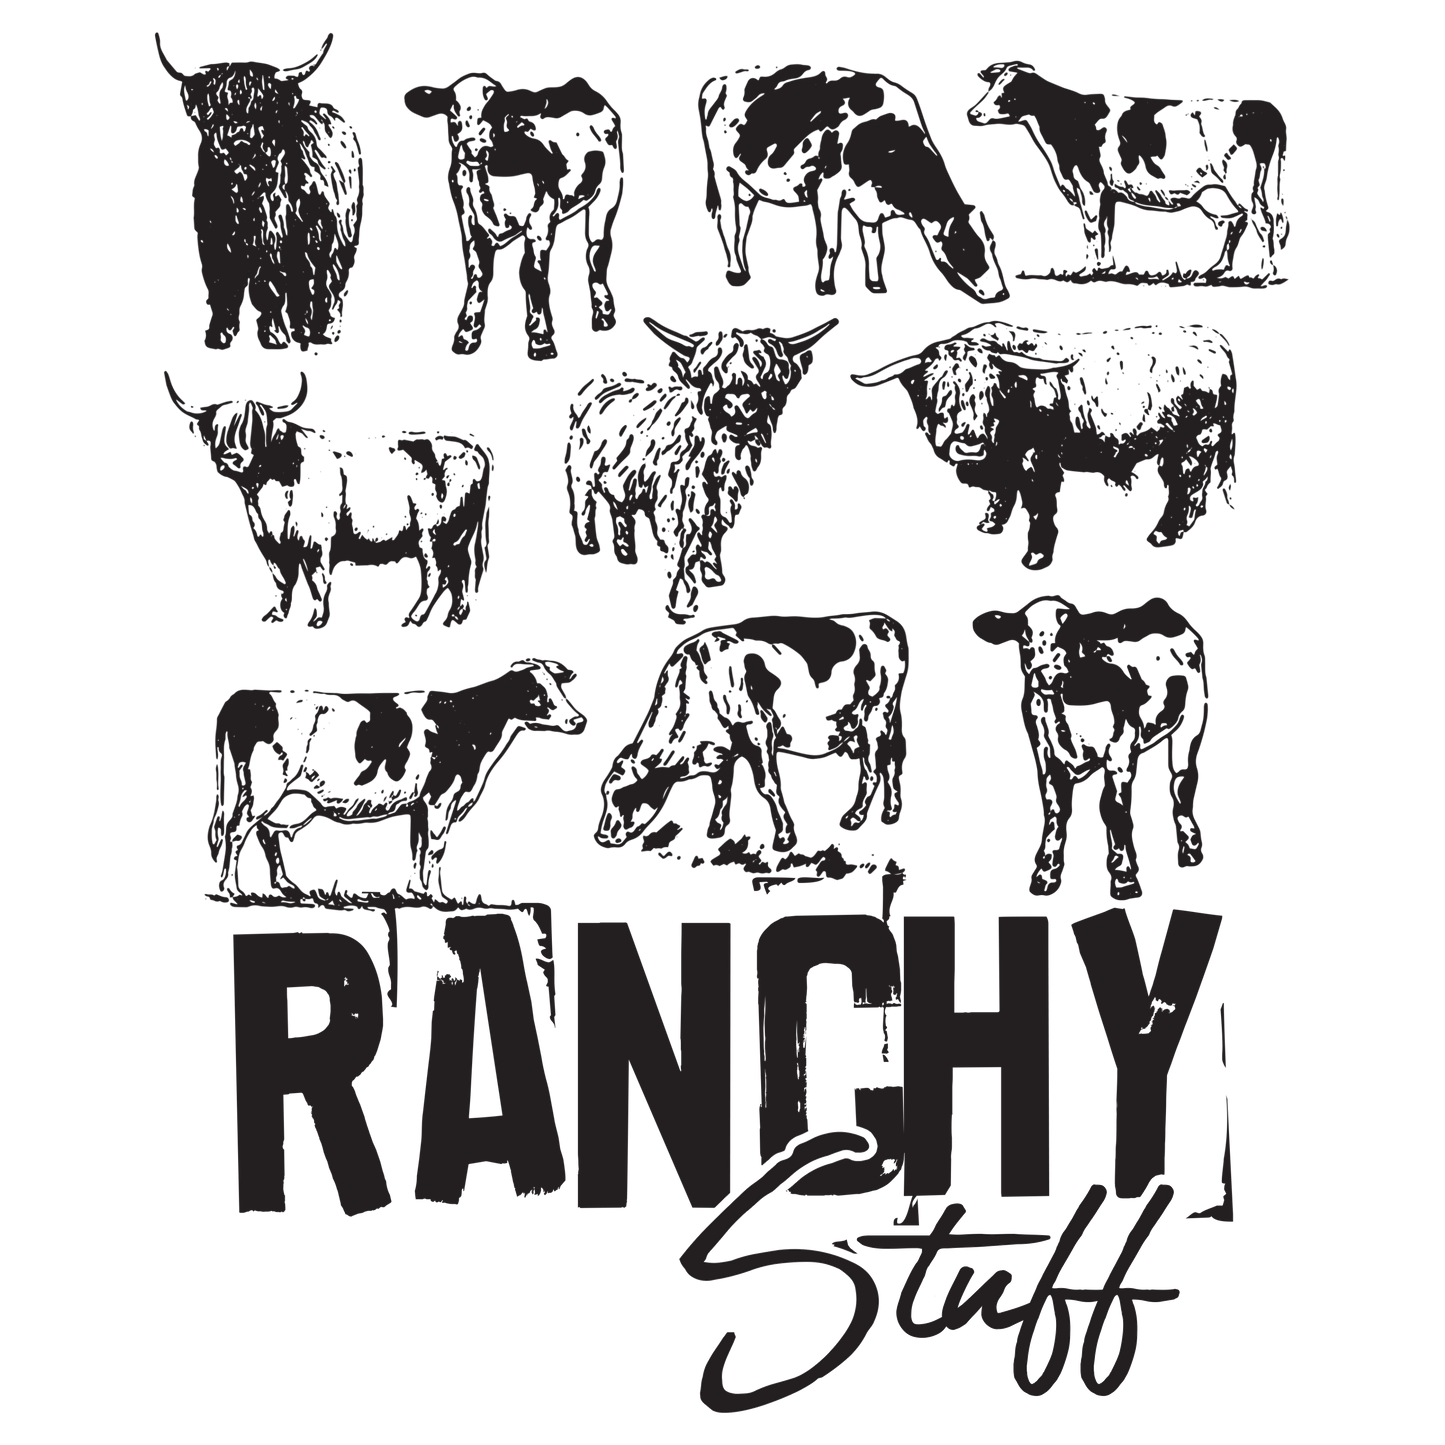 Ranchy Stuff